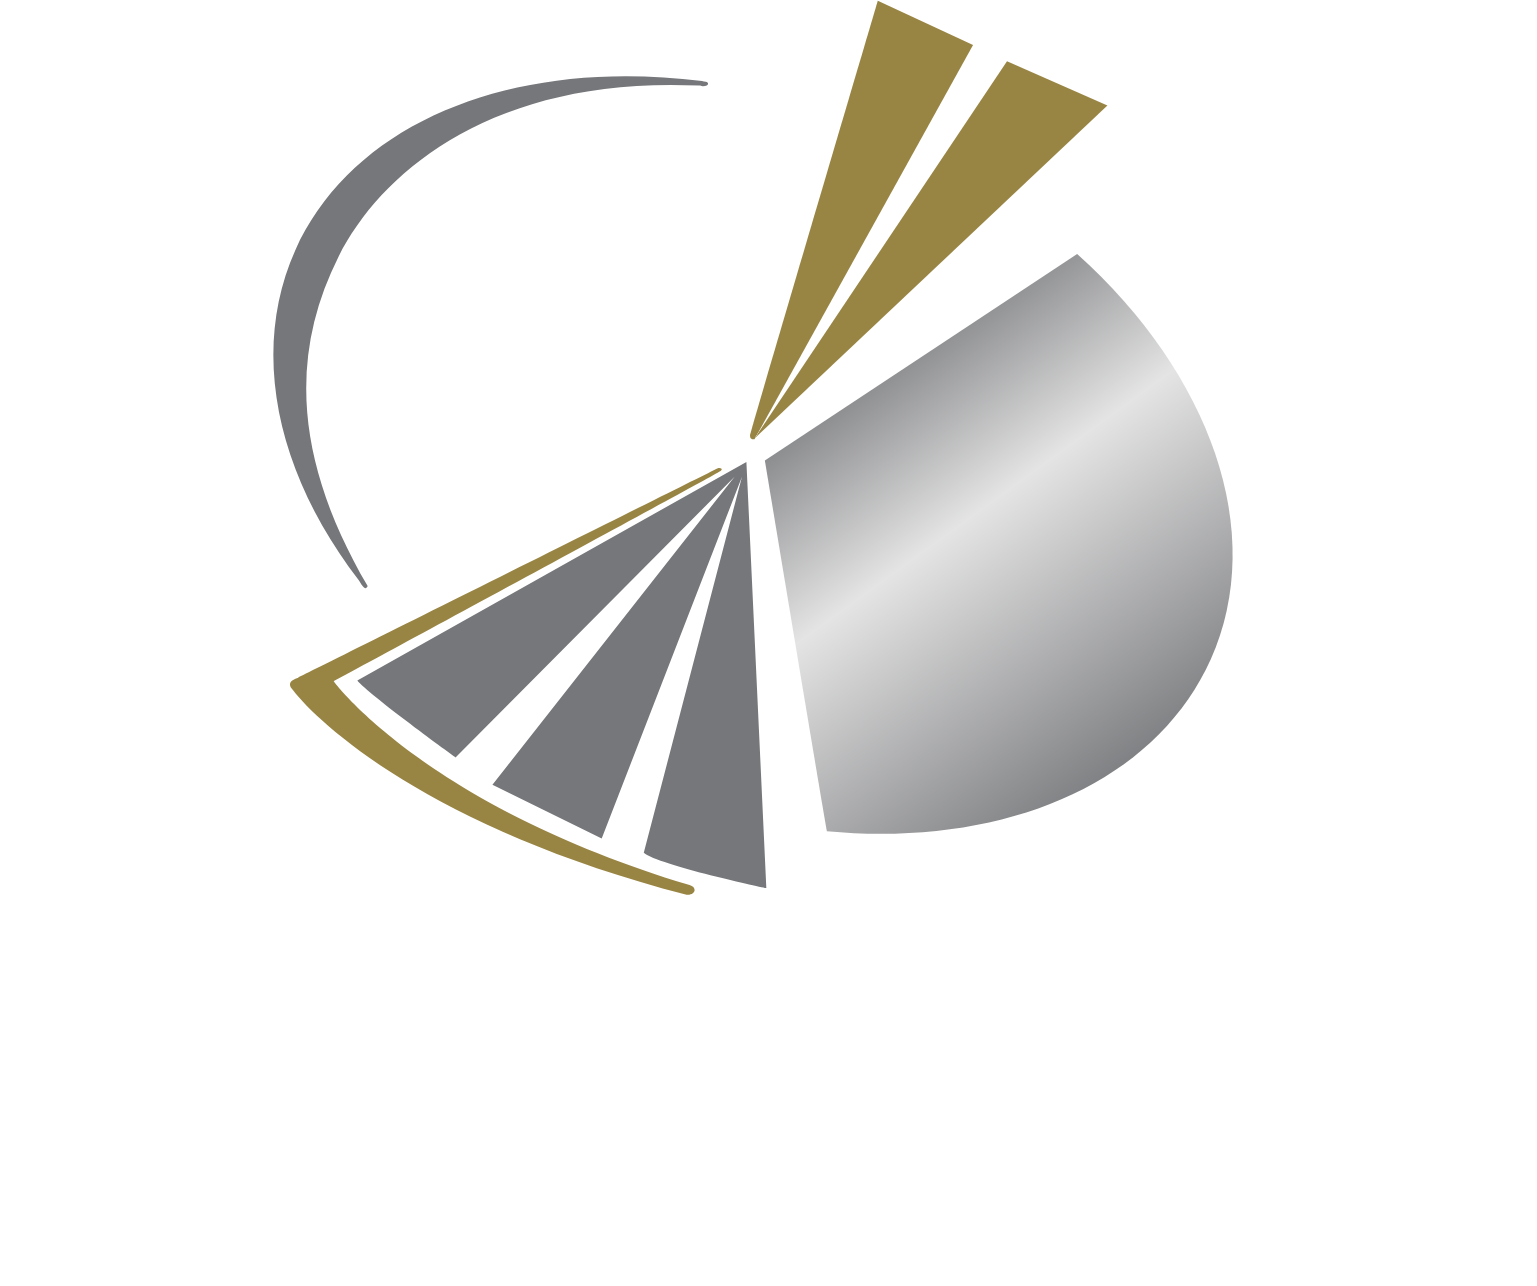 Qatari Investors Group logo grand pour les fonds sombres (PNG transparent)